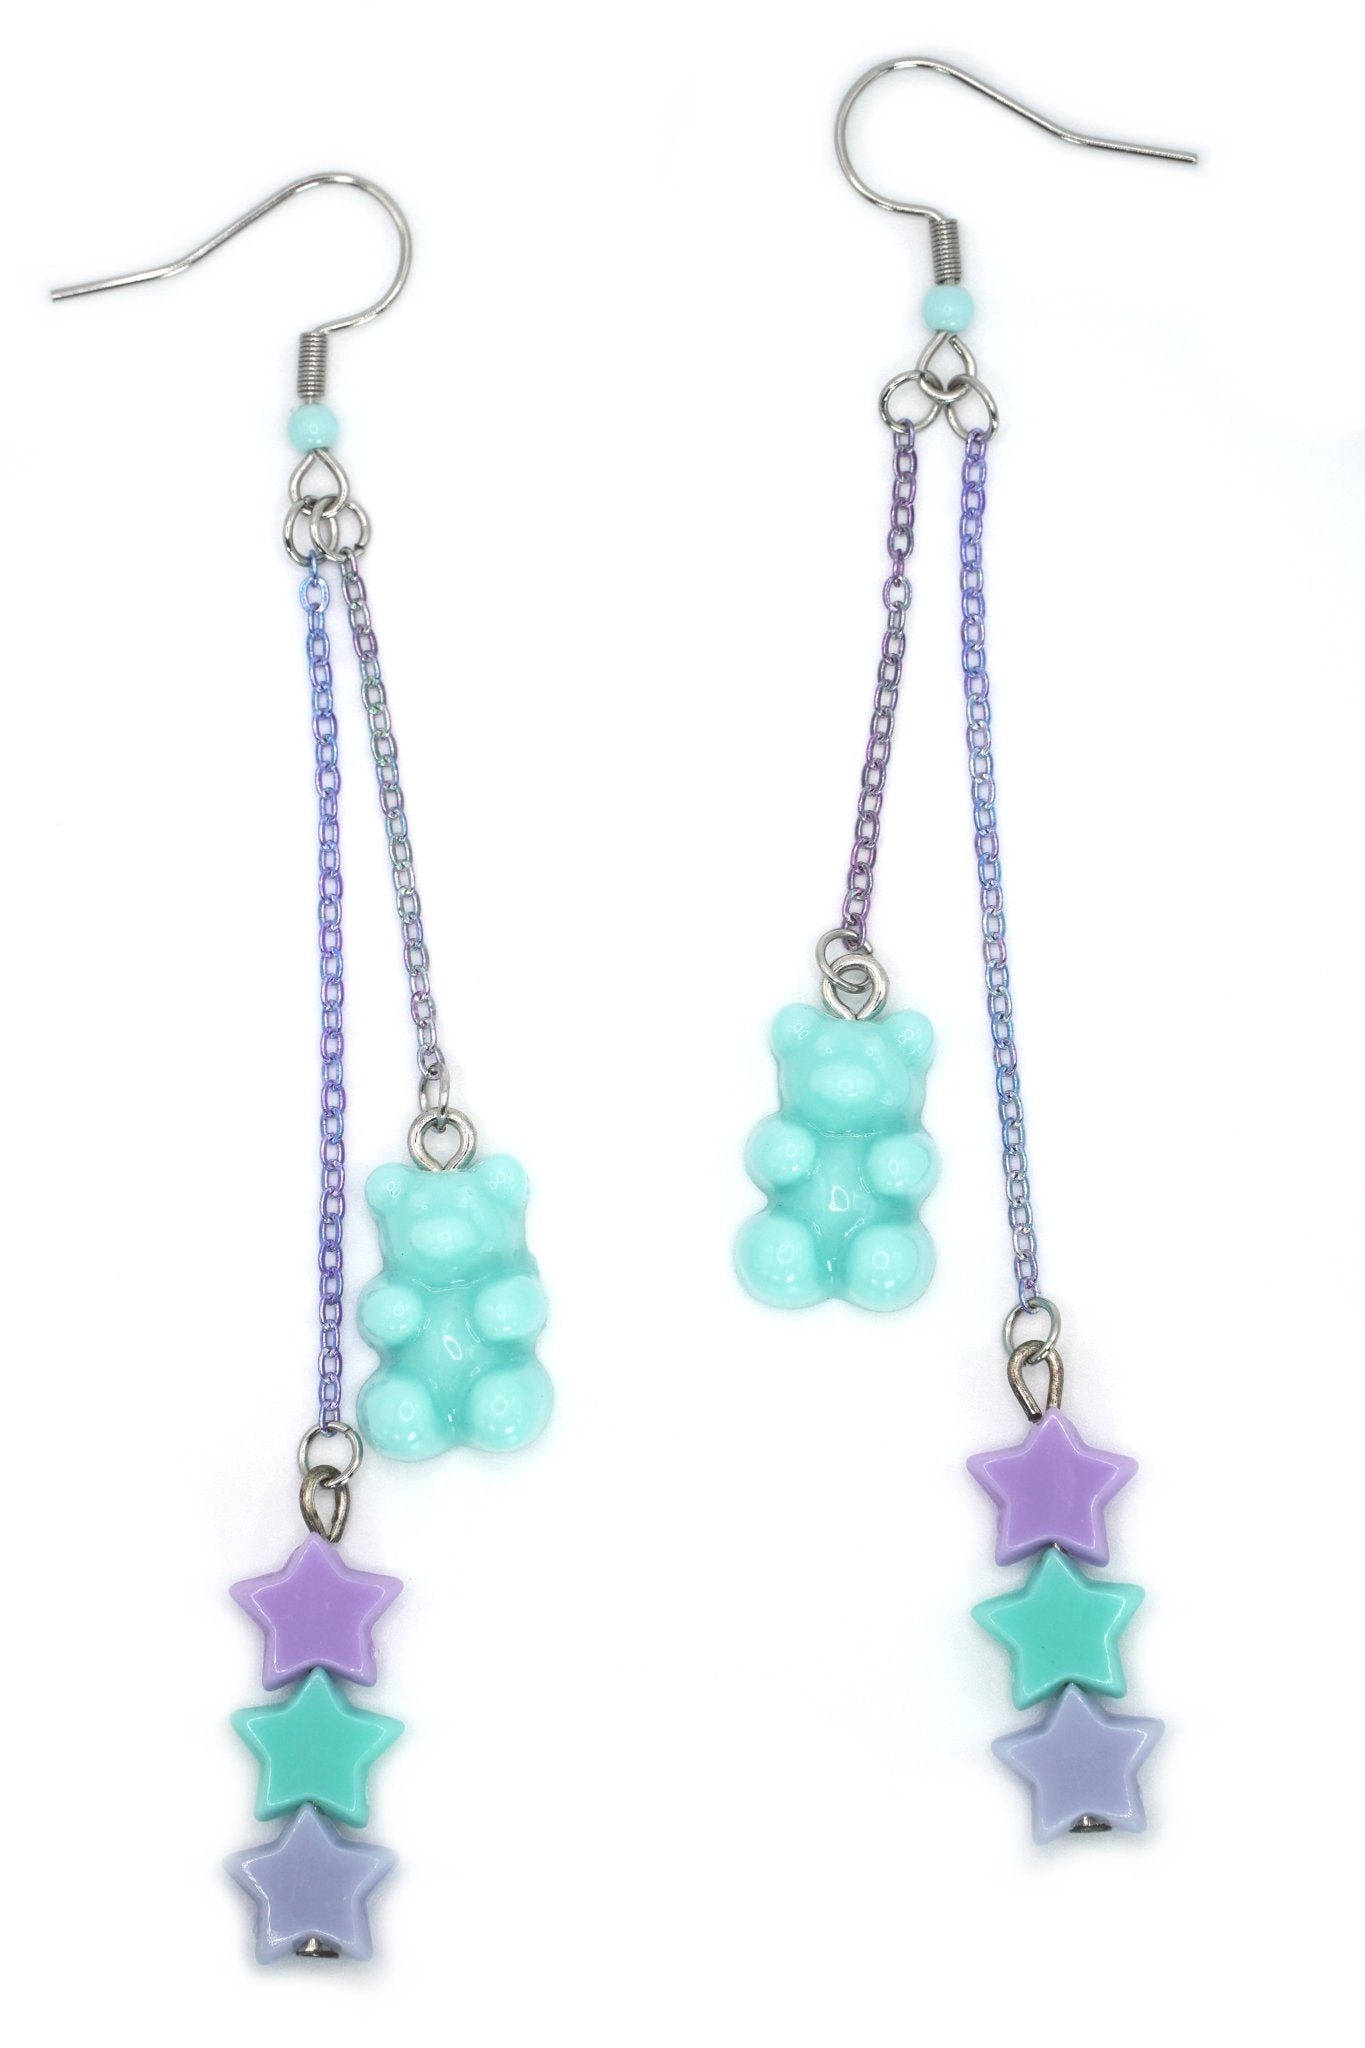 Teal Gummy Bear Earrings with Pastel Stars and Rainbow Chain, Spring Fashion, Girlfriend Gift - Dekowaii Jewelry Company